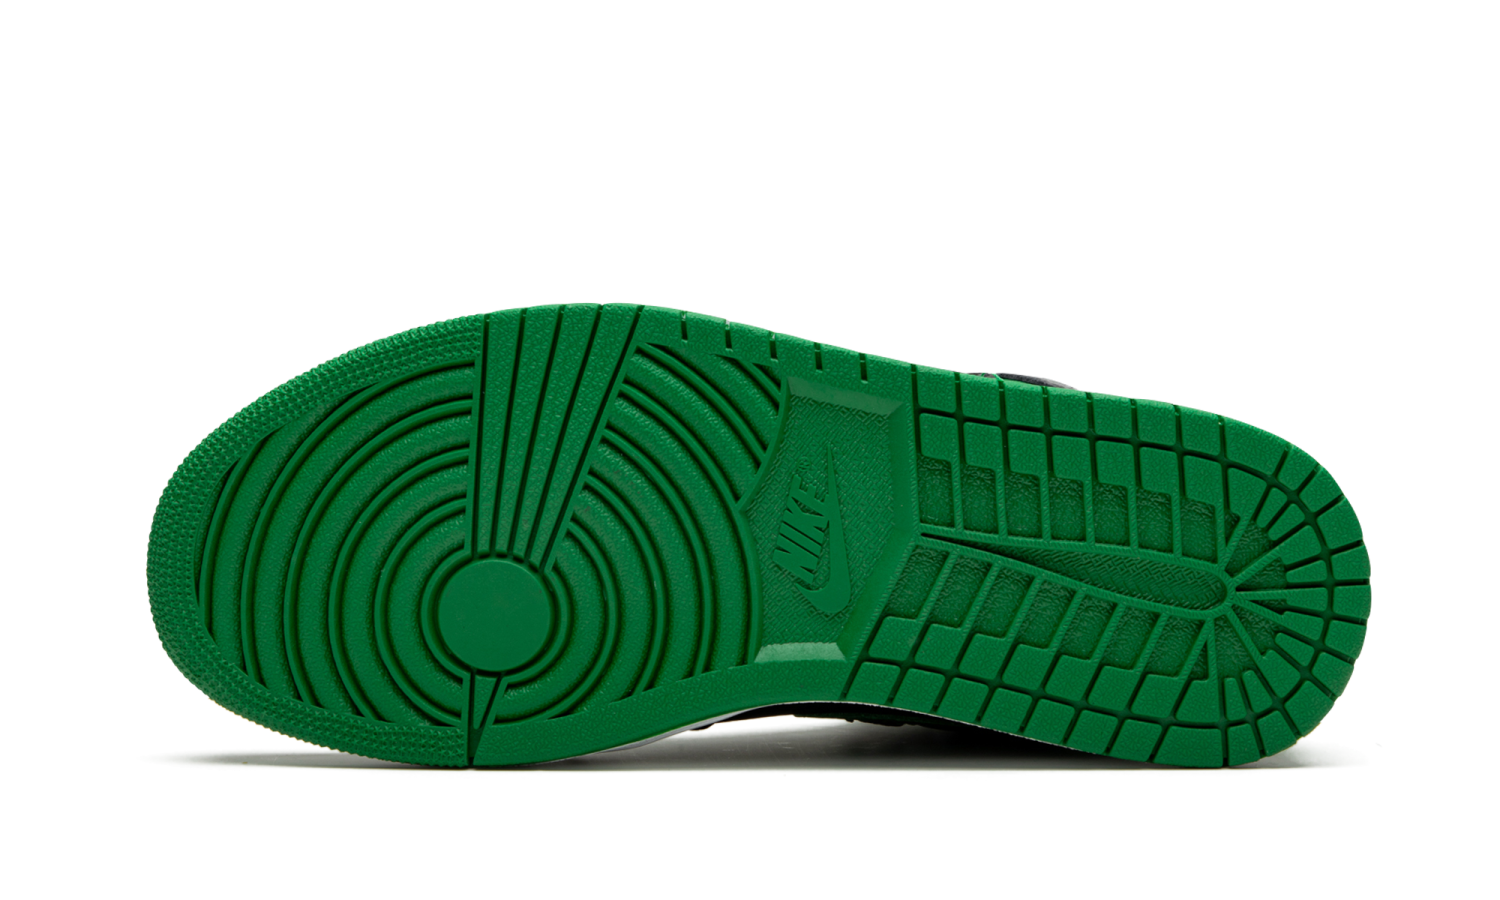 Jordan 1 Retro High “Pine Green 2.0” фото кроссовок